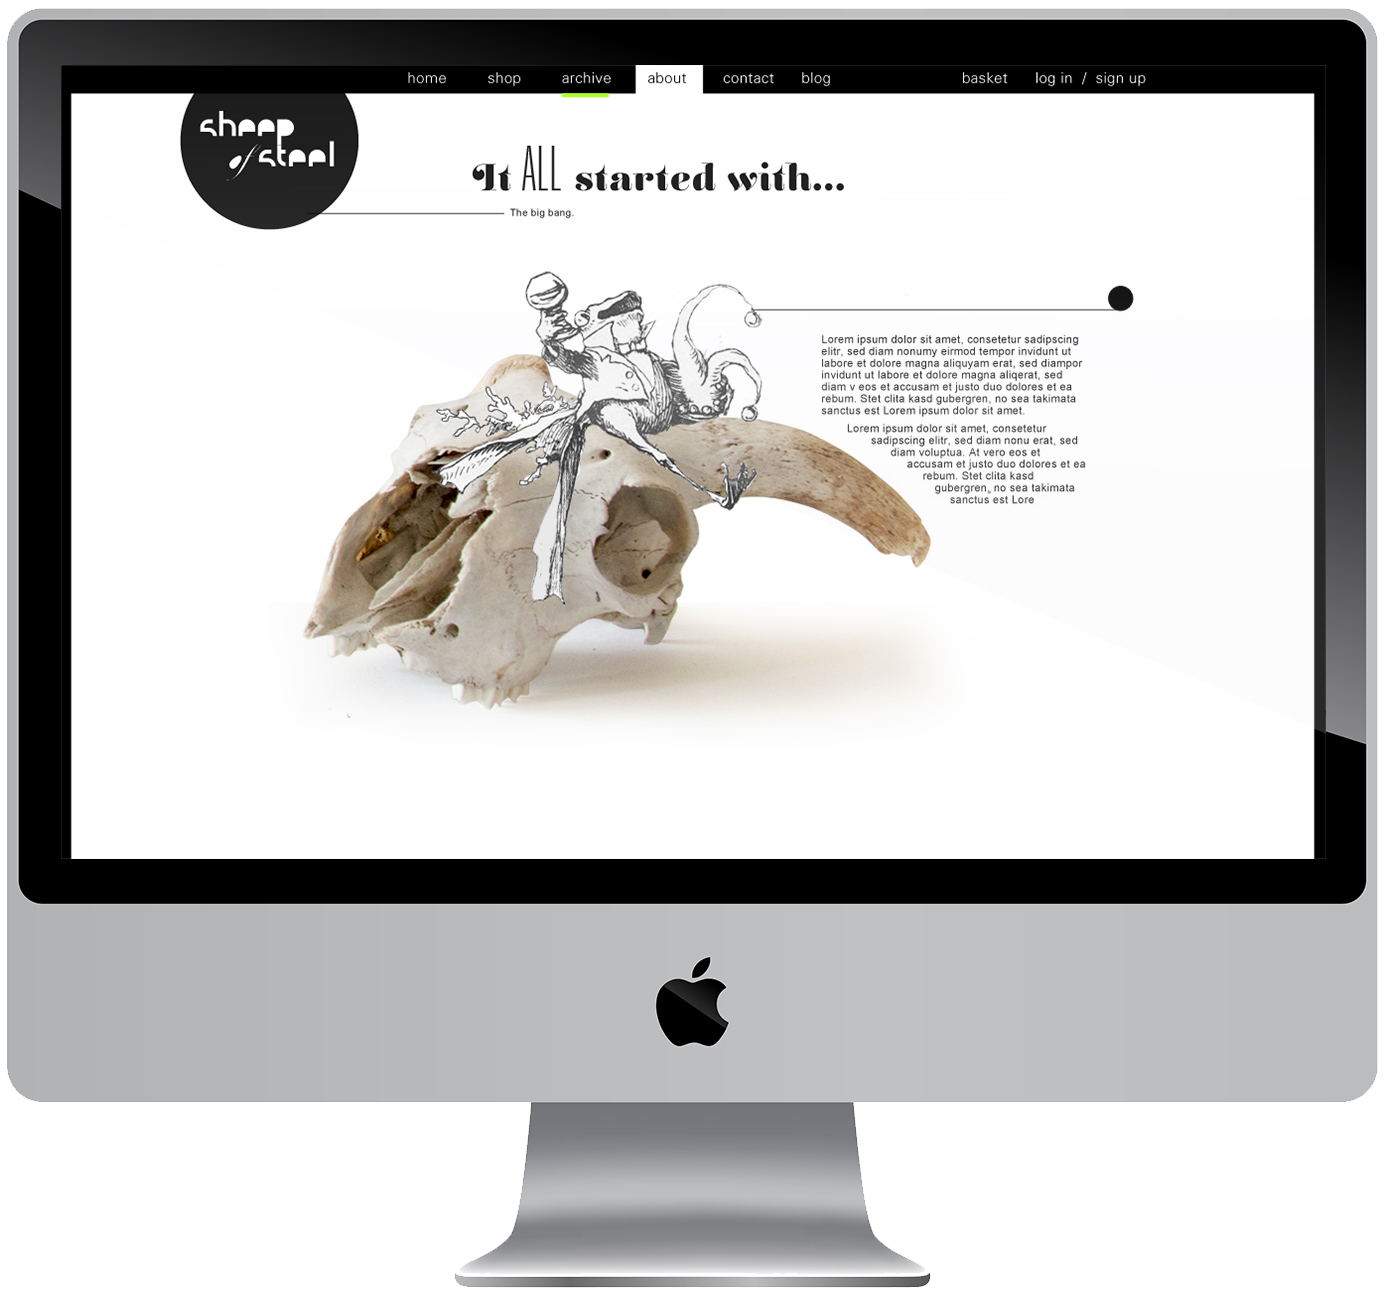 freelance_graphic_designer_London_uk_ecommerce_web_design_01_sheep_of_steel_about